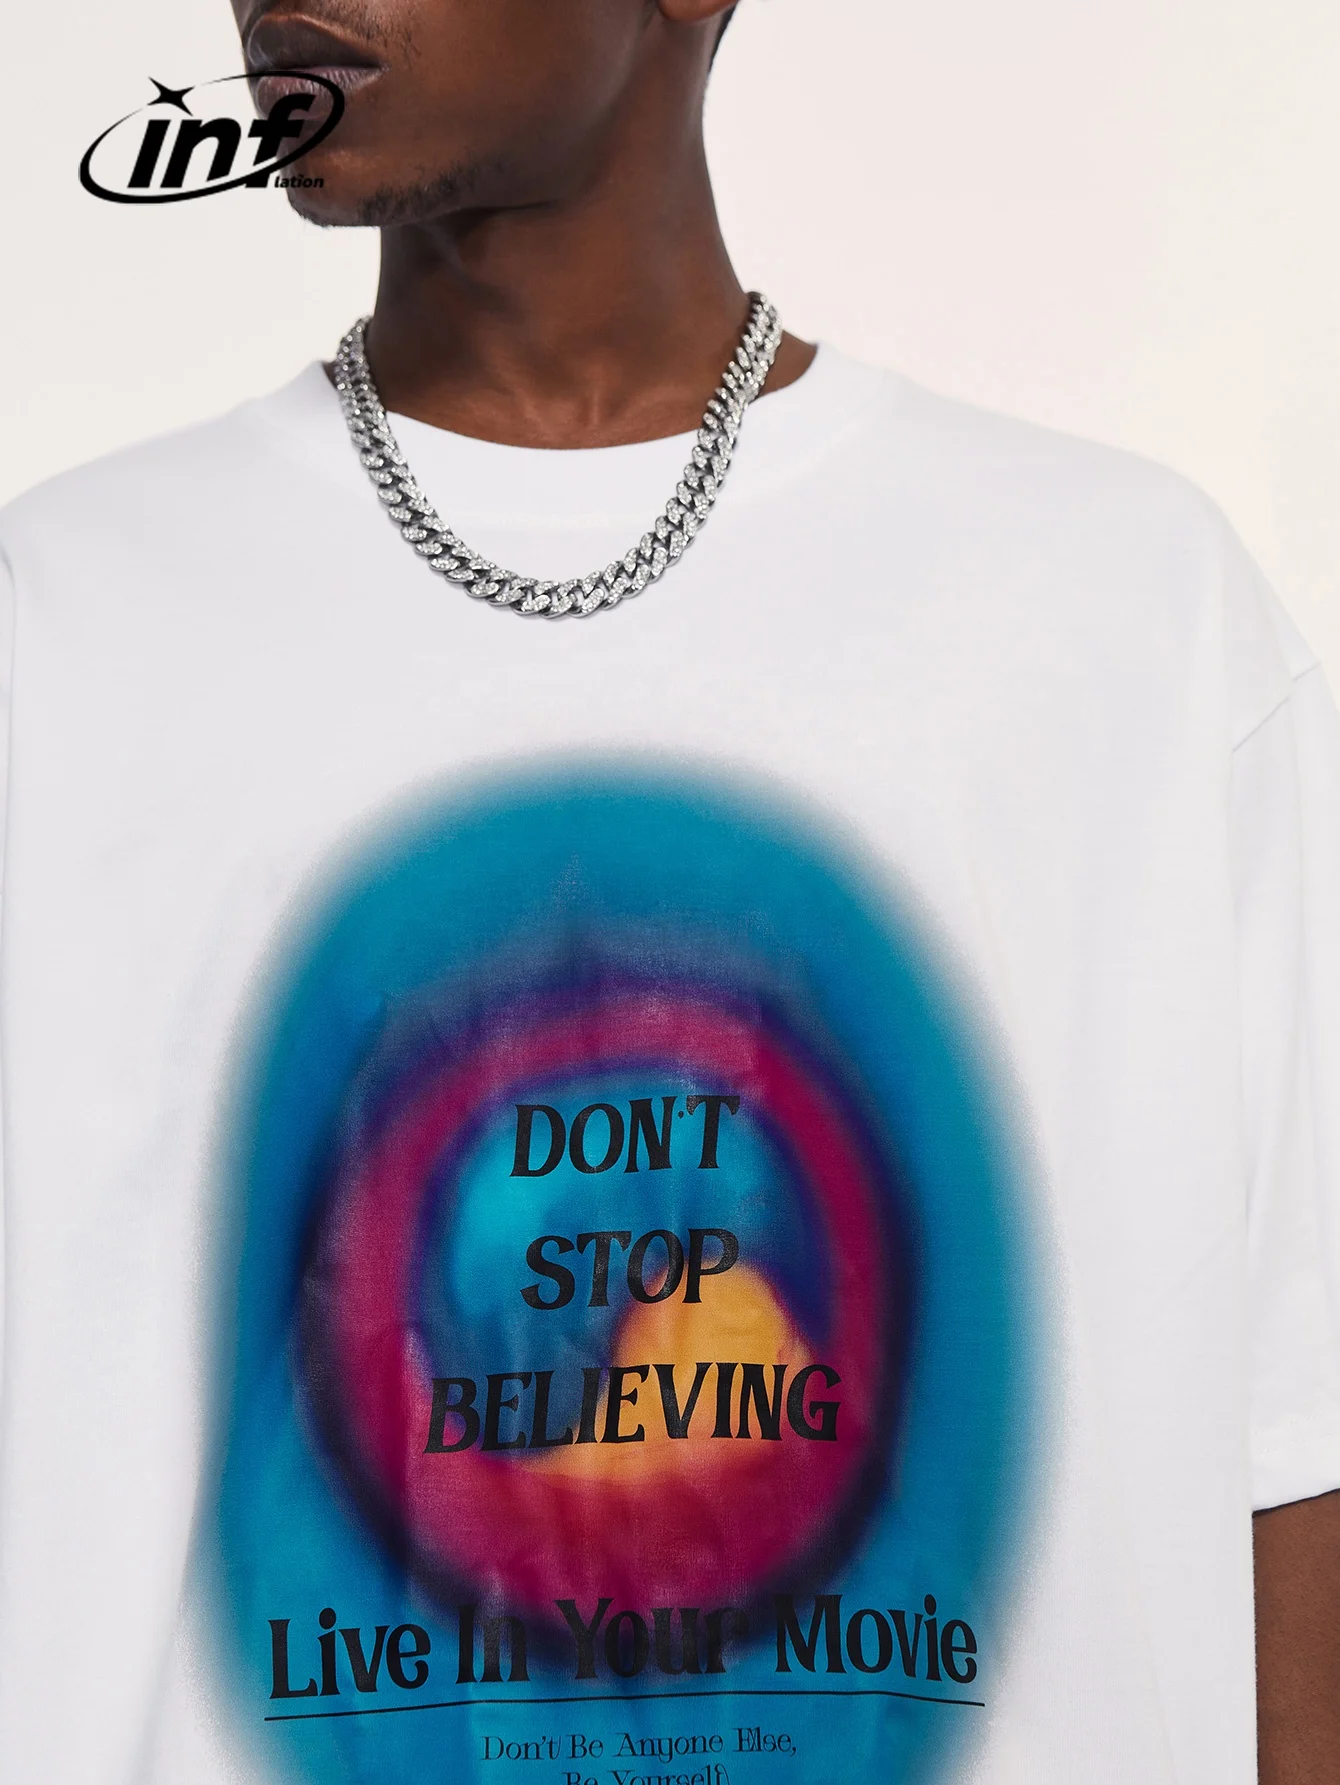 INFLATION Digital Printing 220 gsm Cotton t shirt fashion sport summer hang tag high quality tee shirt